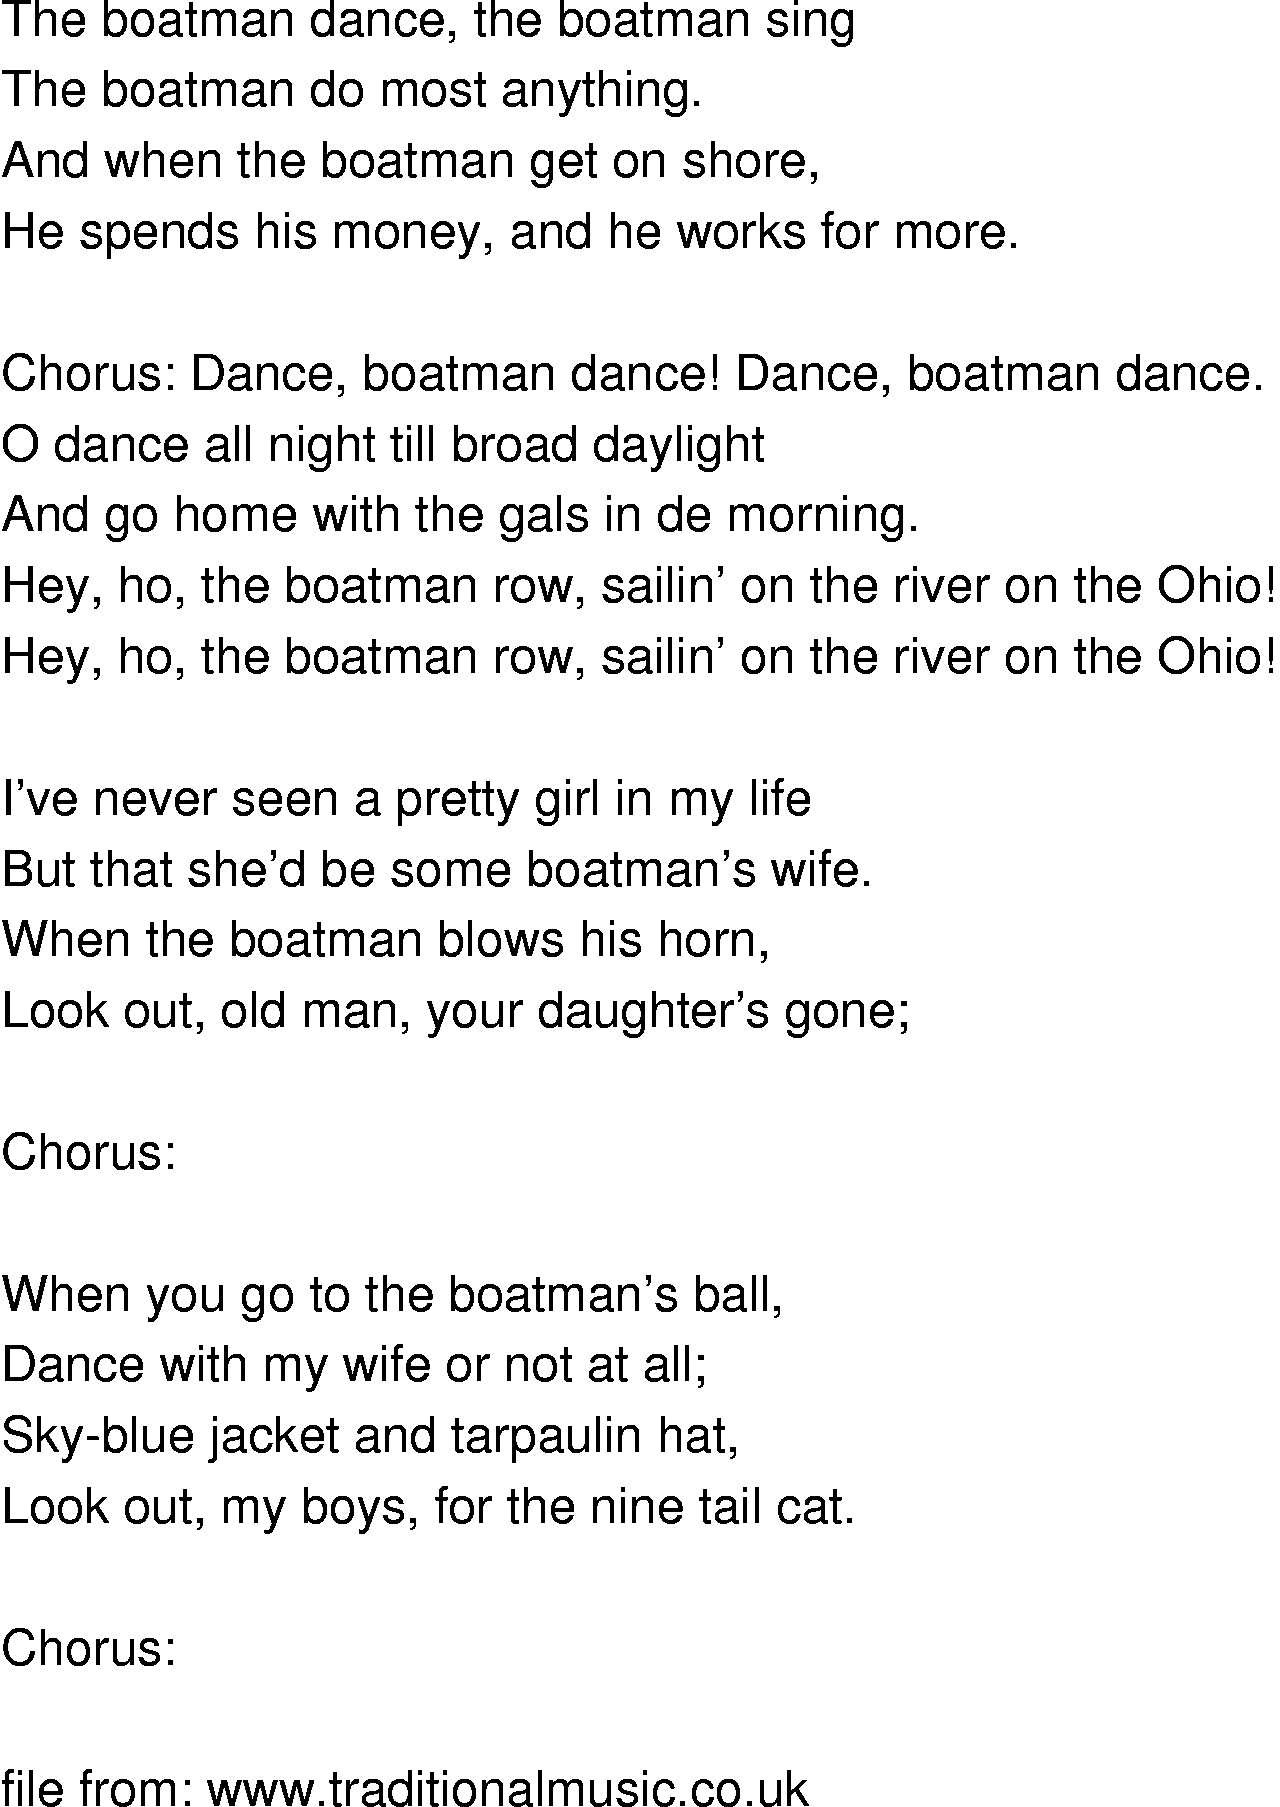 Old-Time (oldtimey) Song Lyrics - boatman dance